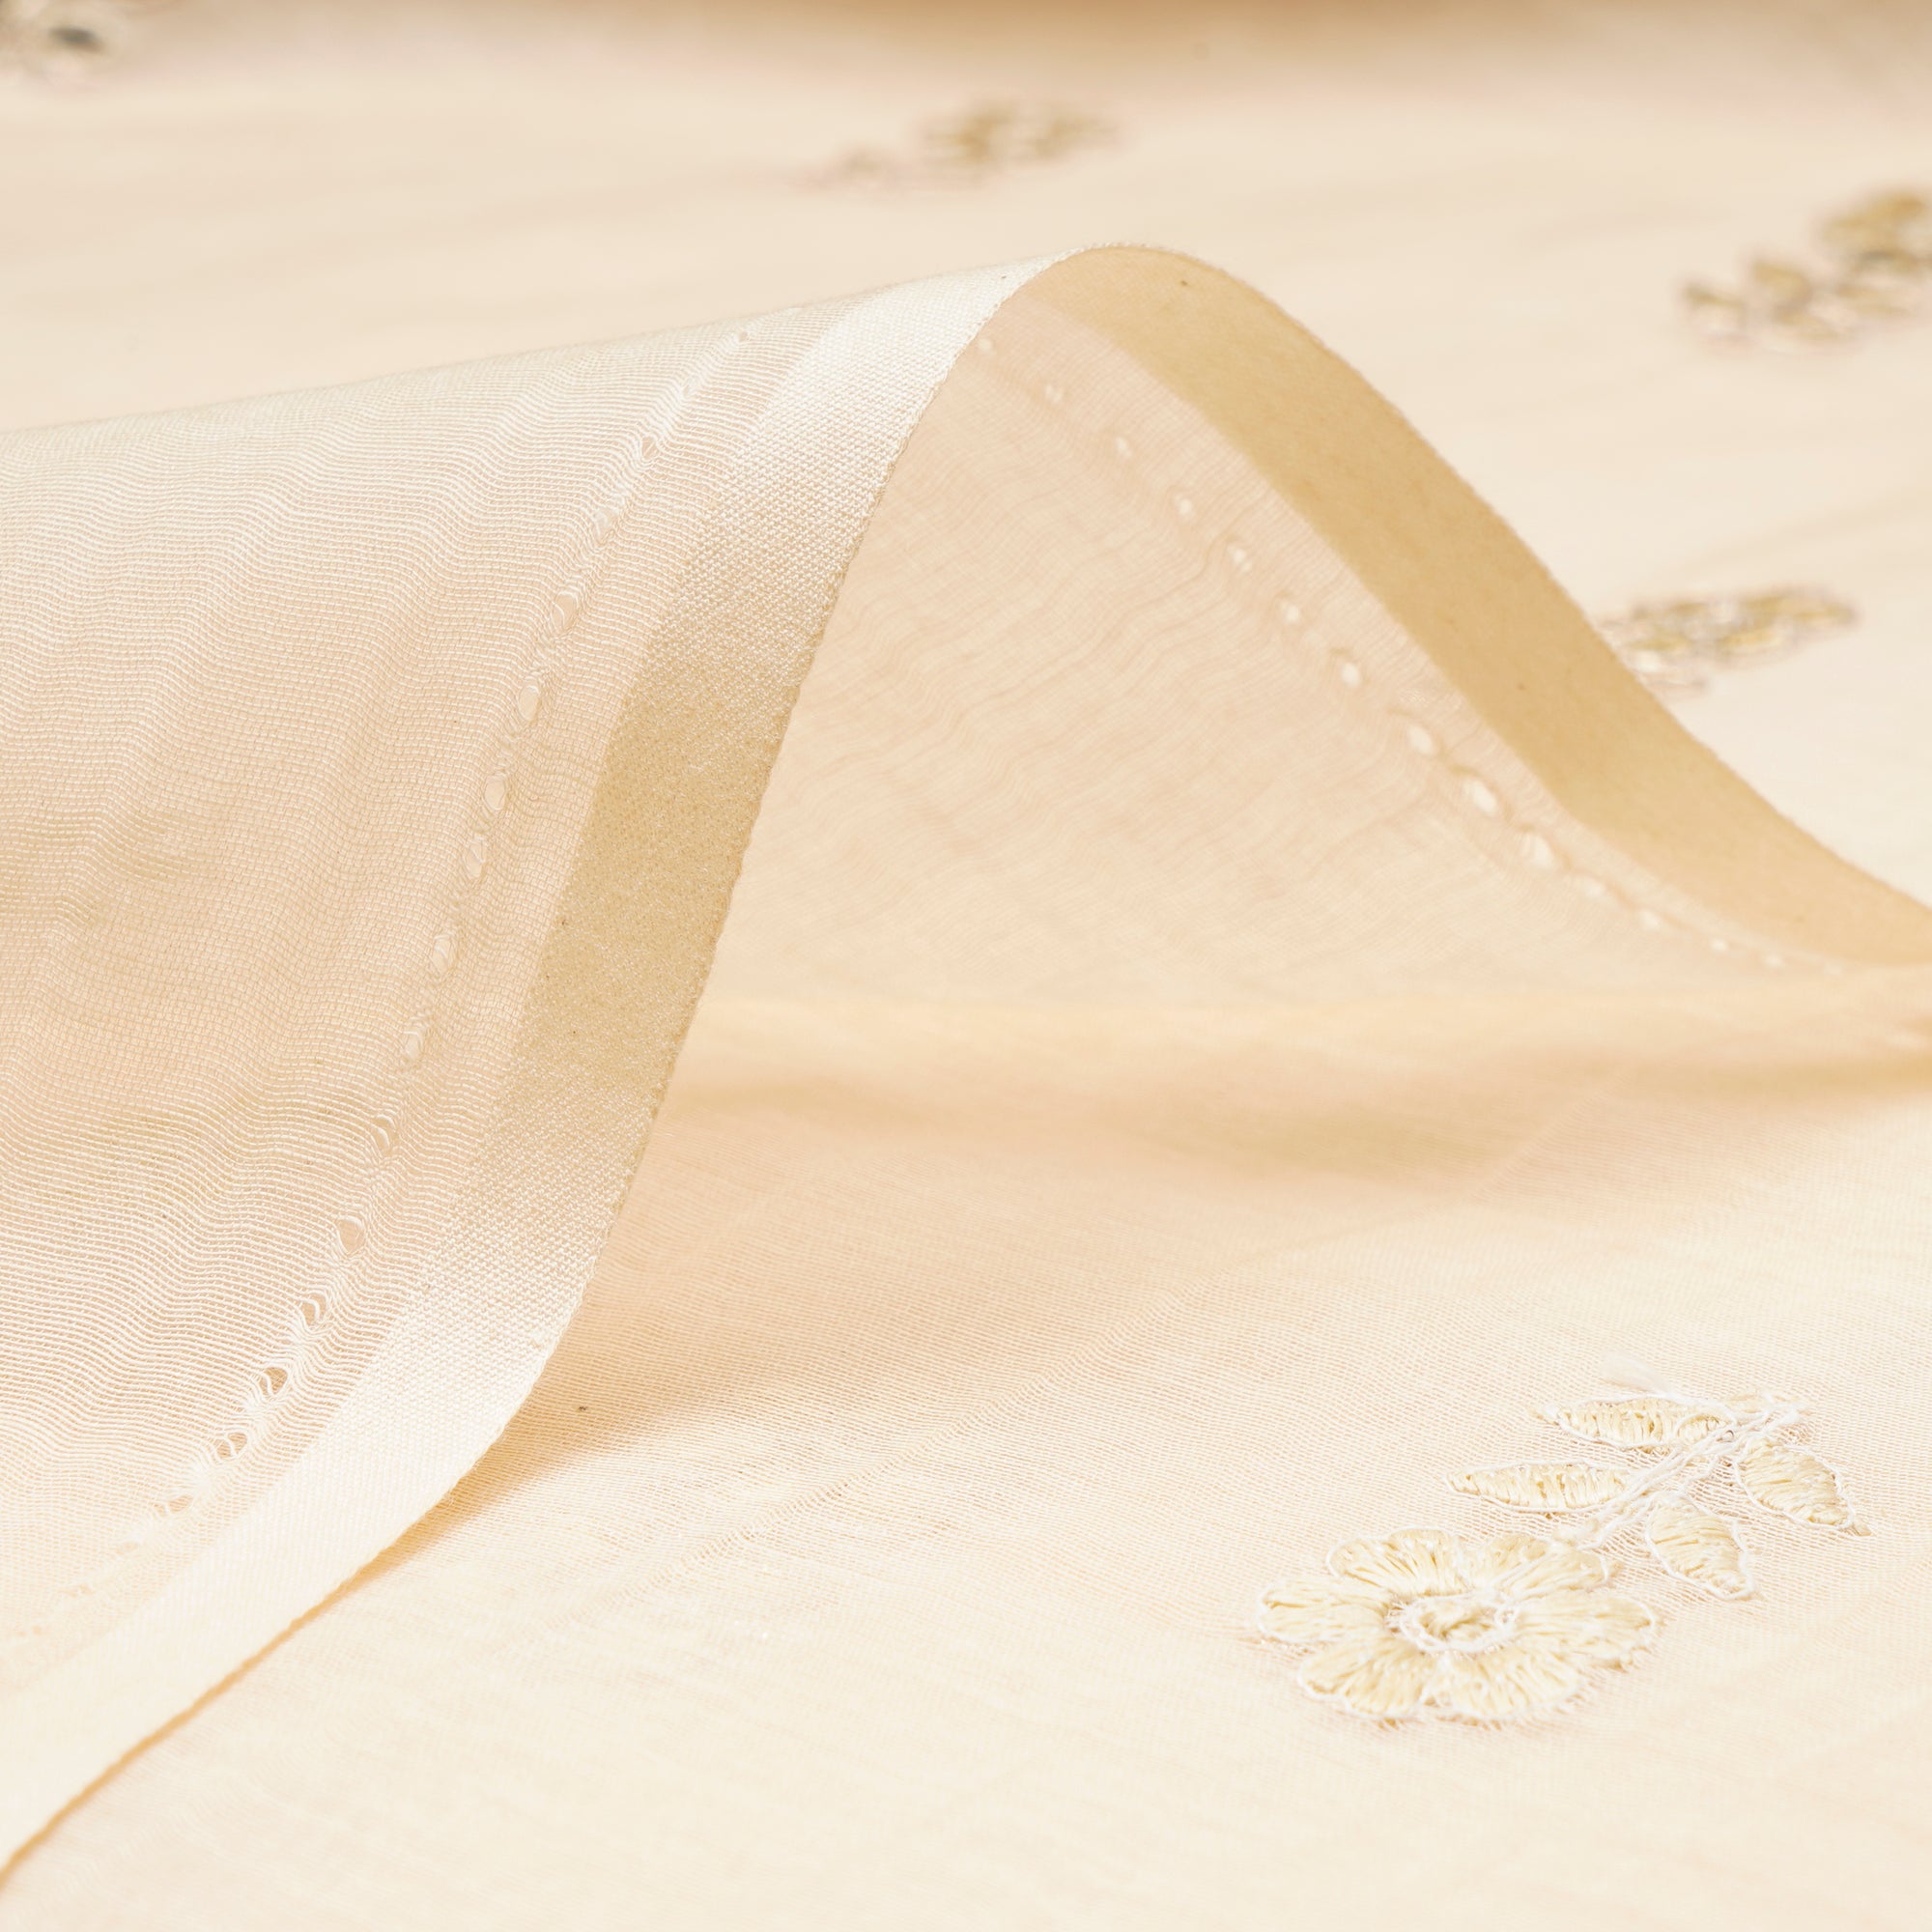 First Blush Motif Pattern Thread Embroidered Chanderi Fabric